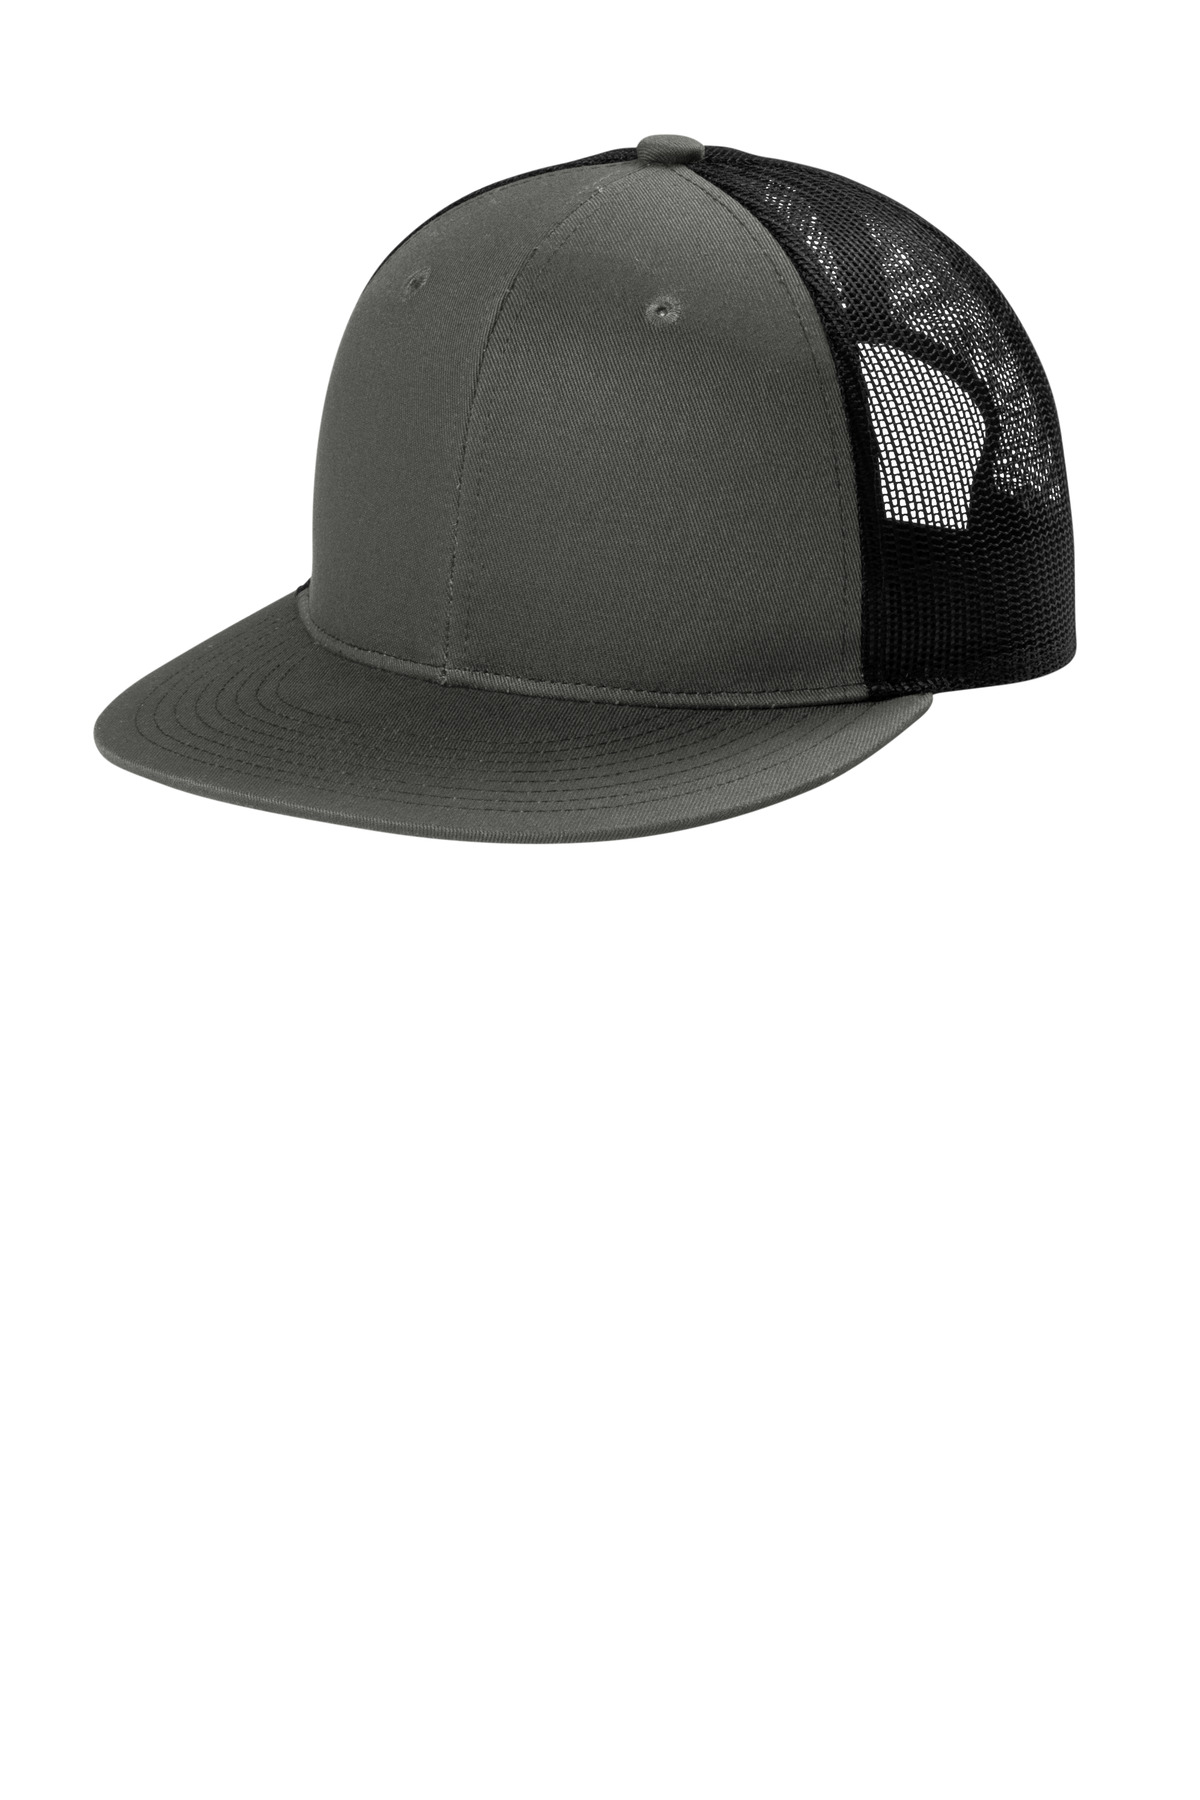 New High Quality Plain Black FLAT PEAK Trucker Mesh Cotton Snapback Cap hat 